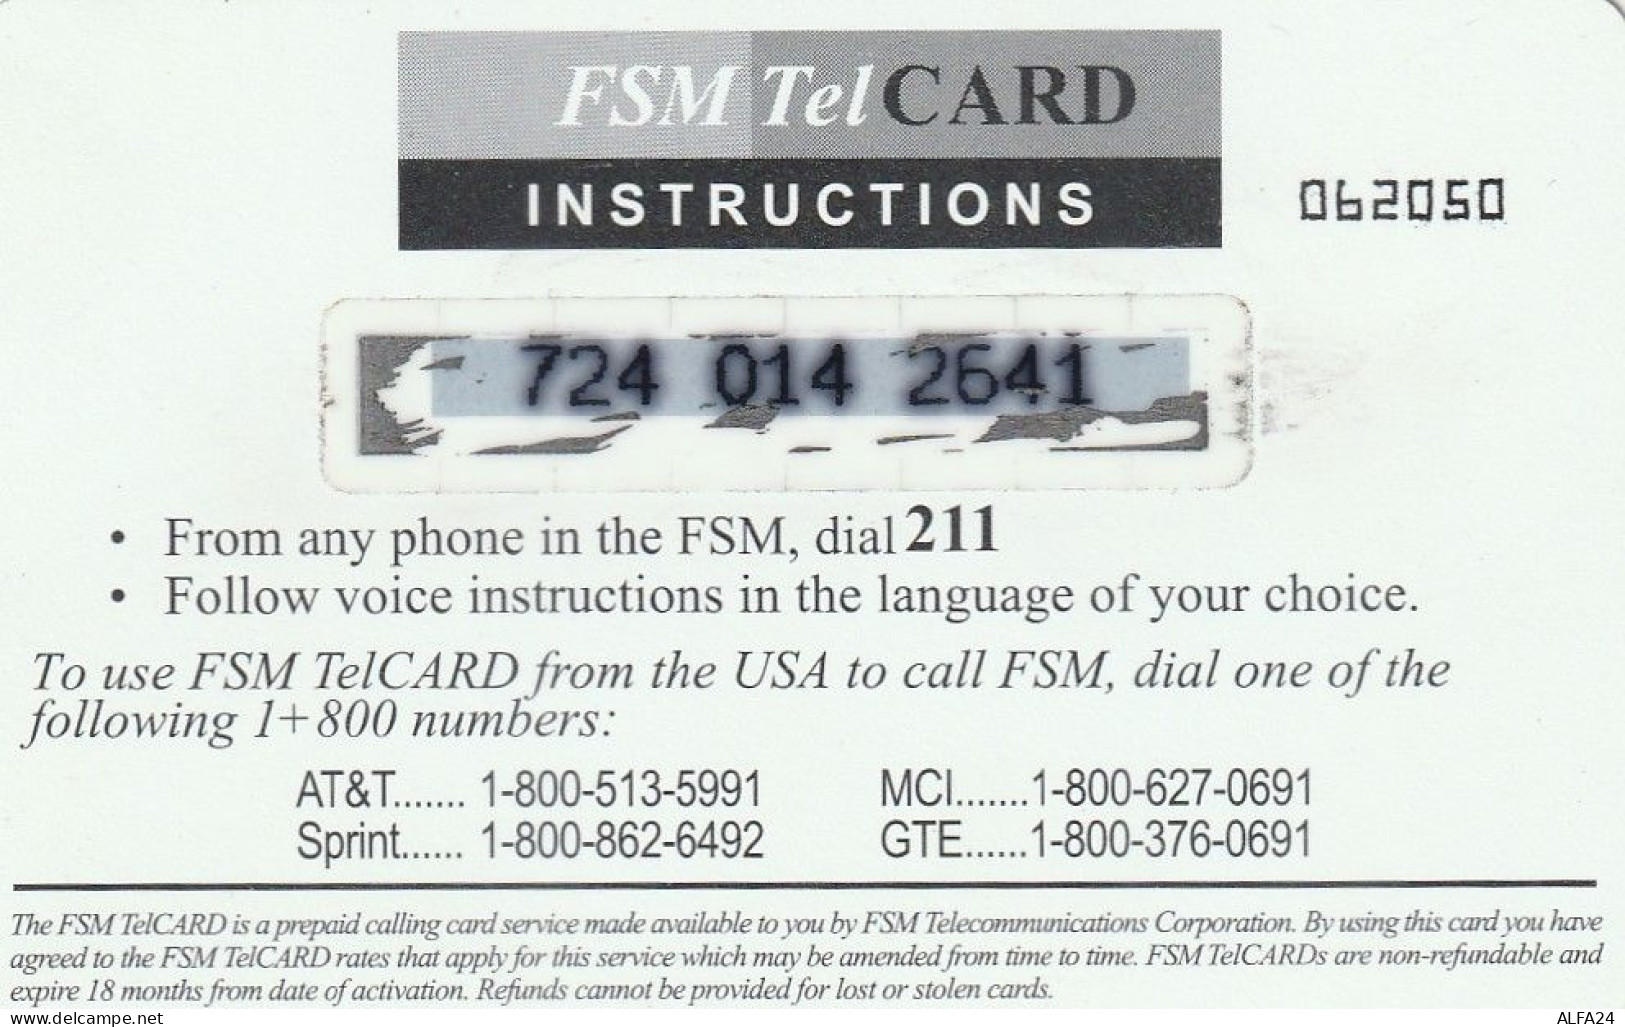 PREPAID PHONE CARD MICRONESIA  (E5.20.4 - Micronesië